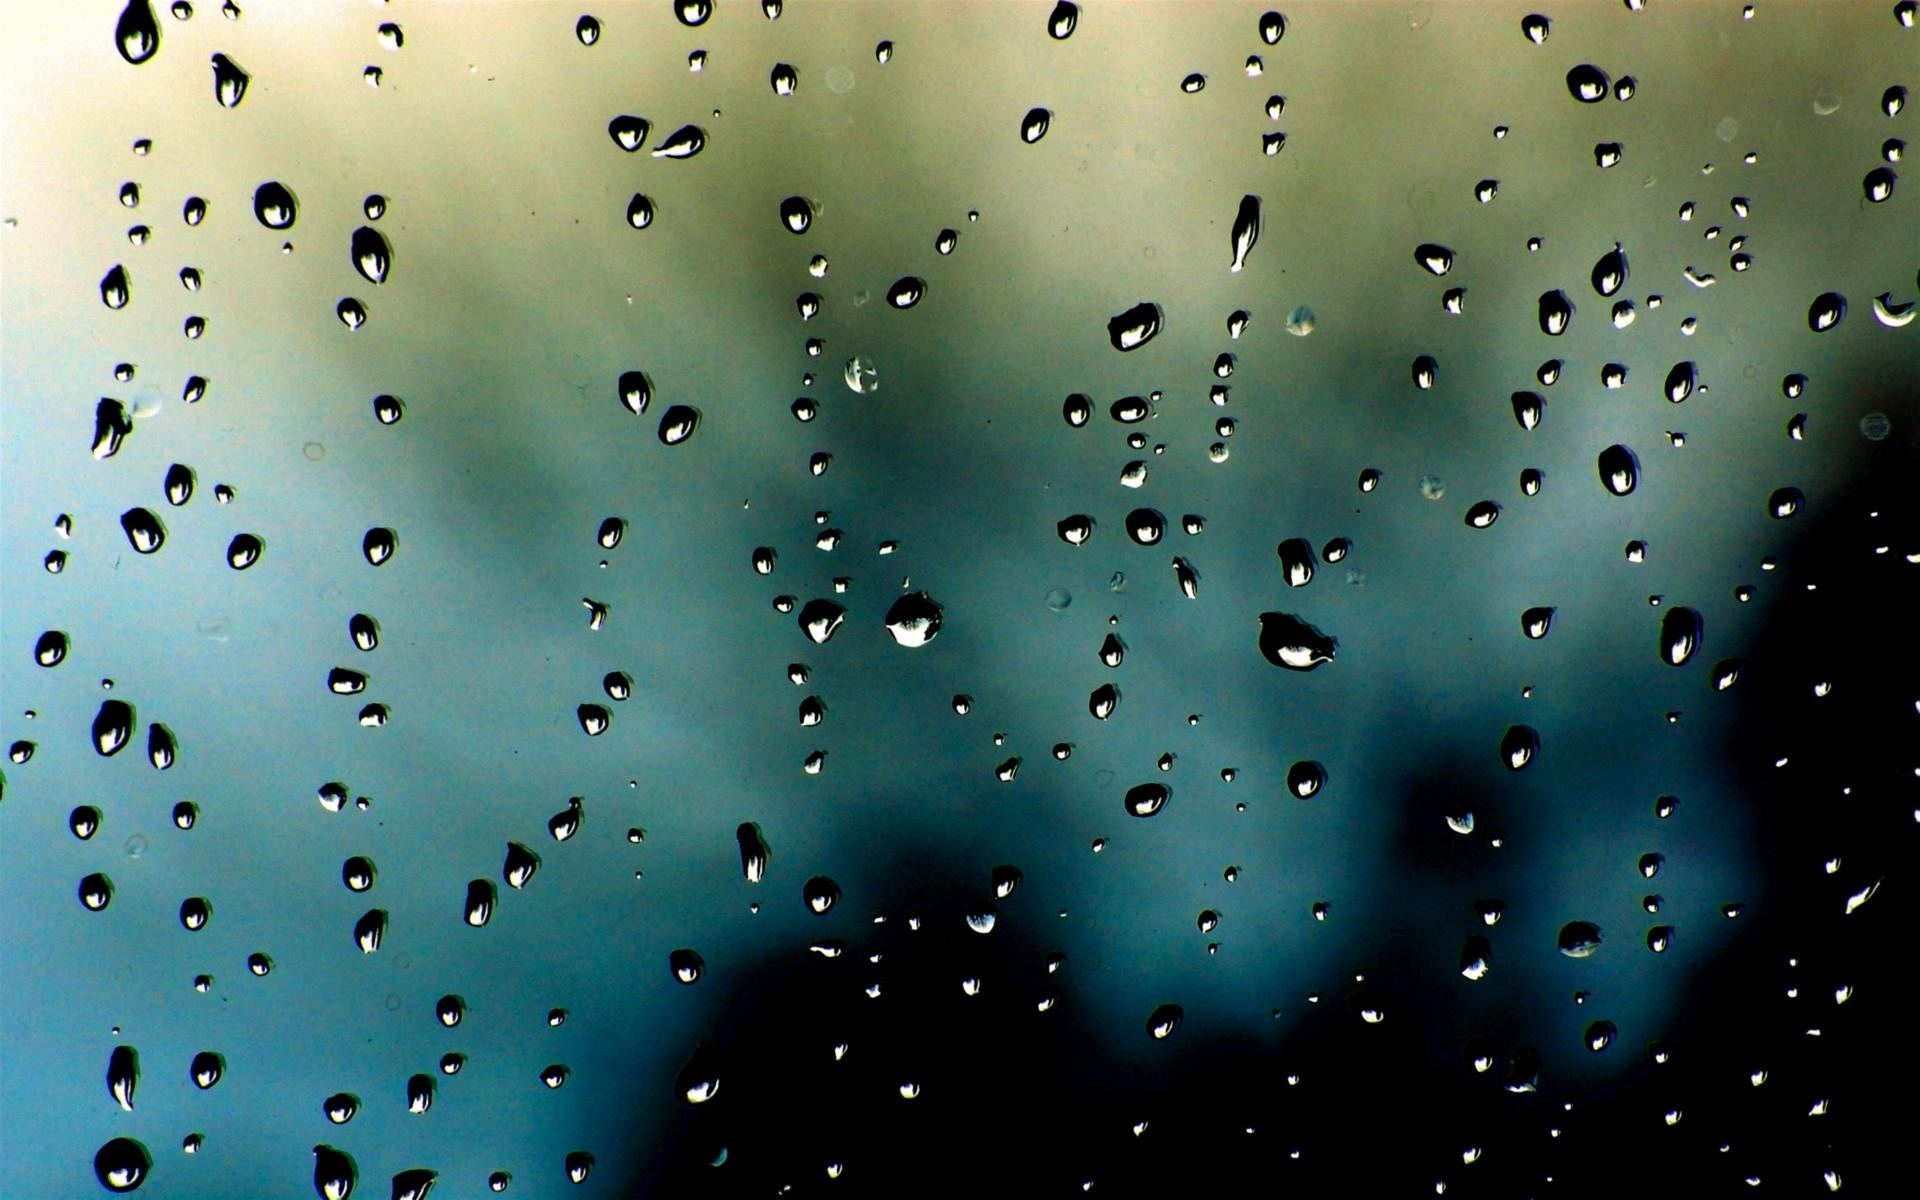 Rain Wallpaper Photos Download The BEST Free Rain Wallpaper Stock Photos   HD Images